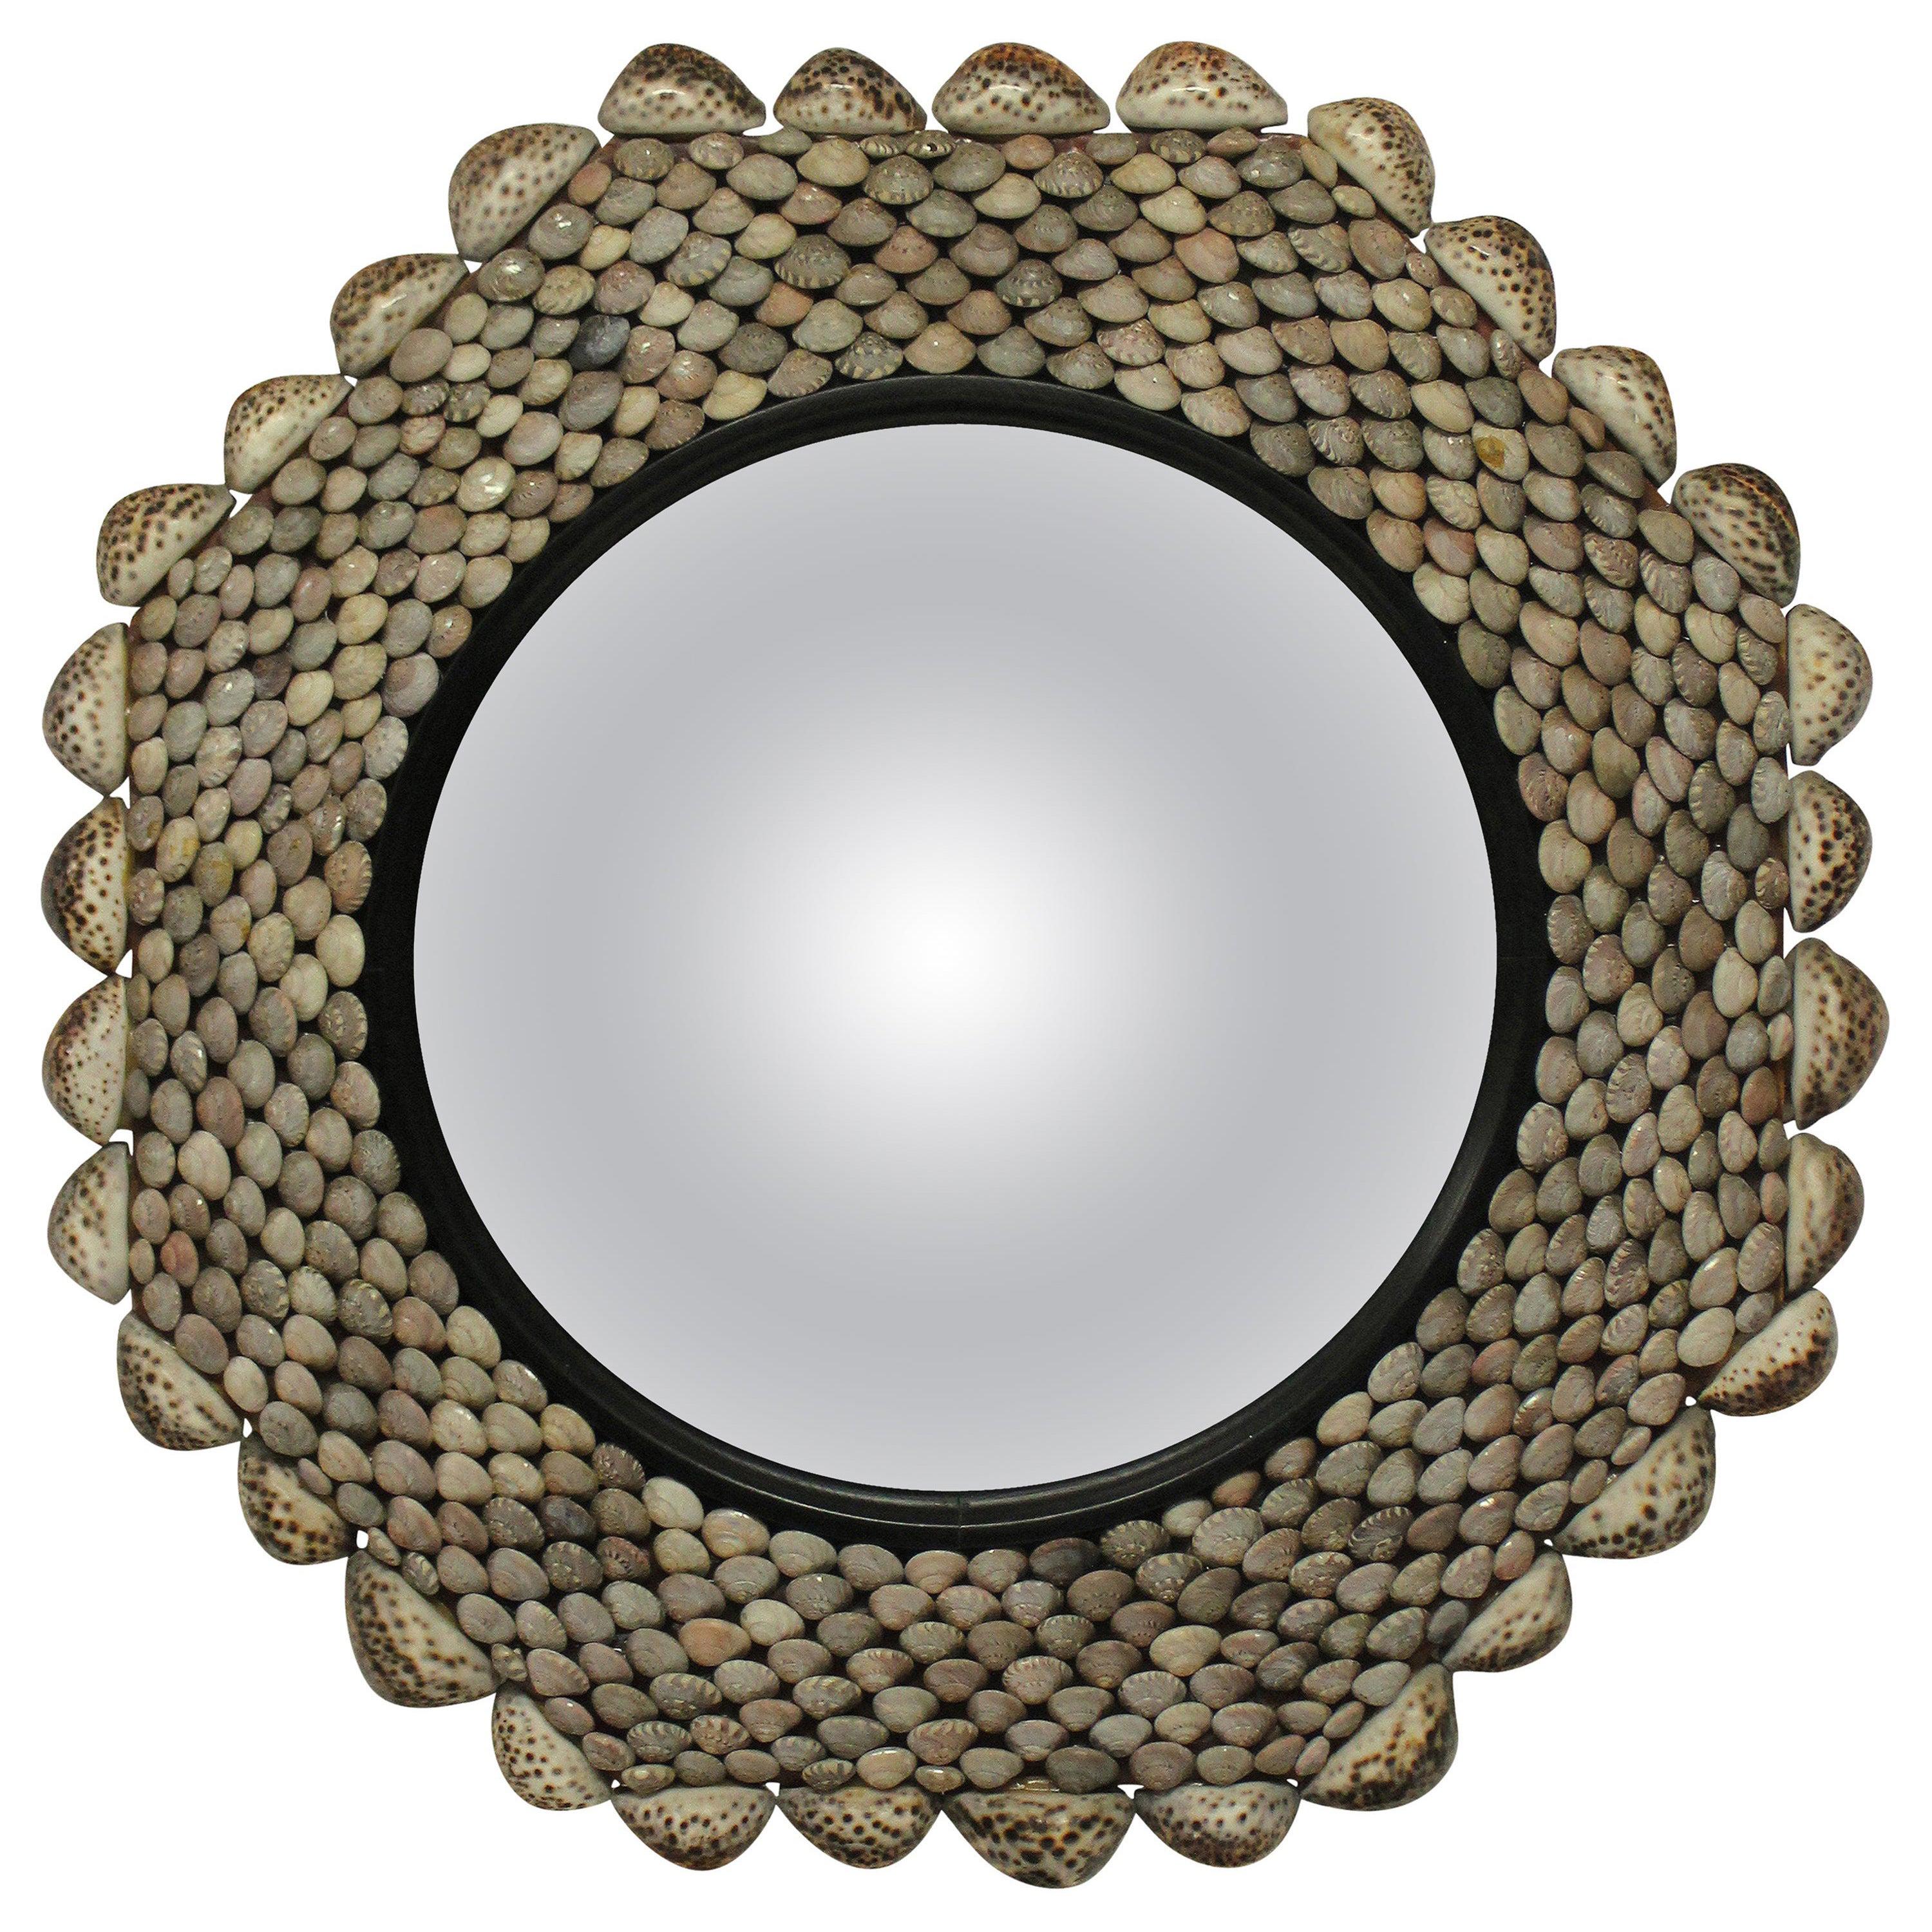 Midcentury Octagonal Shell Convex Mirror